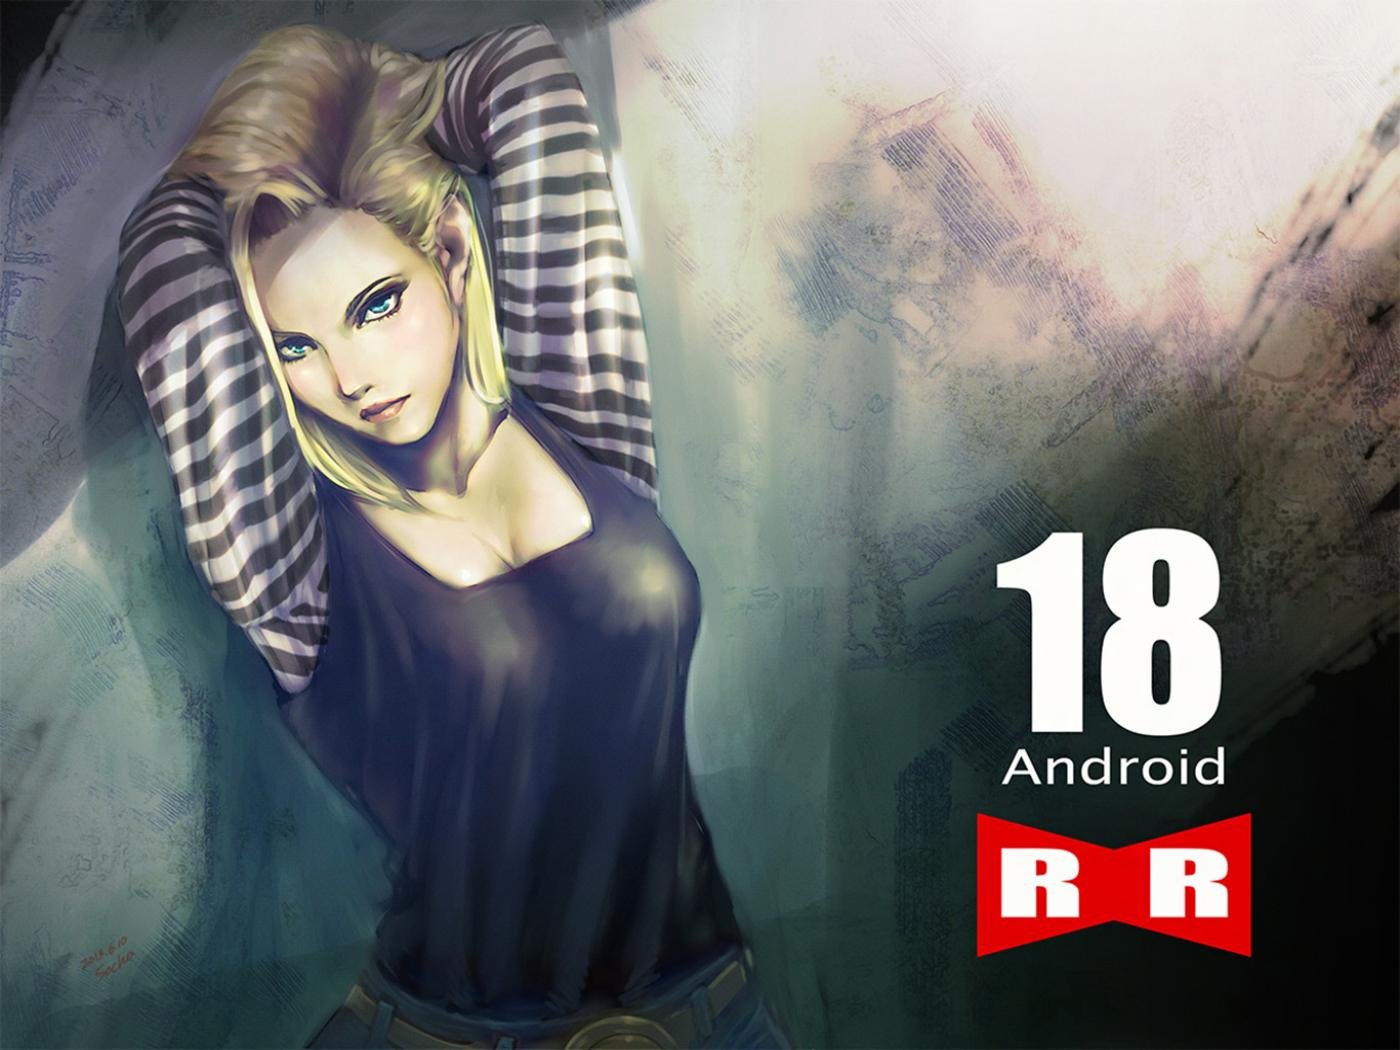 Android 18 (Dragon Ball) wallpapers HD